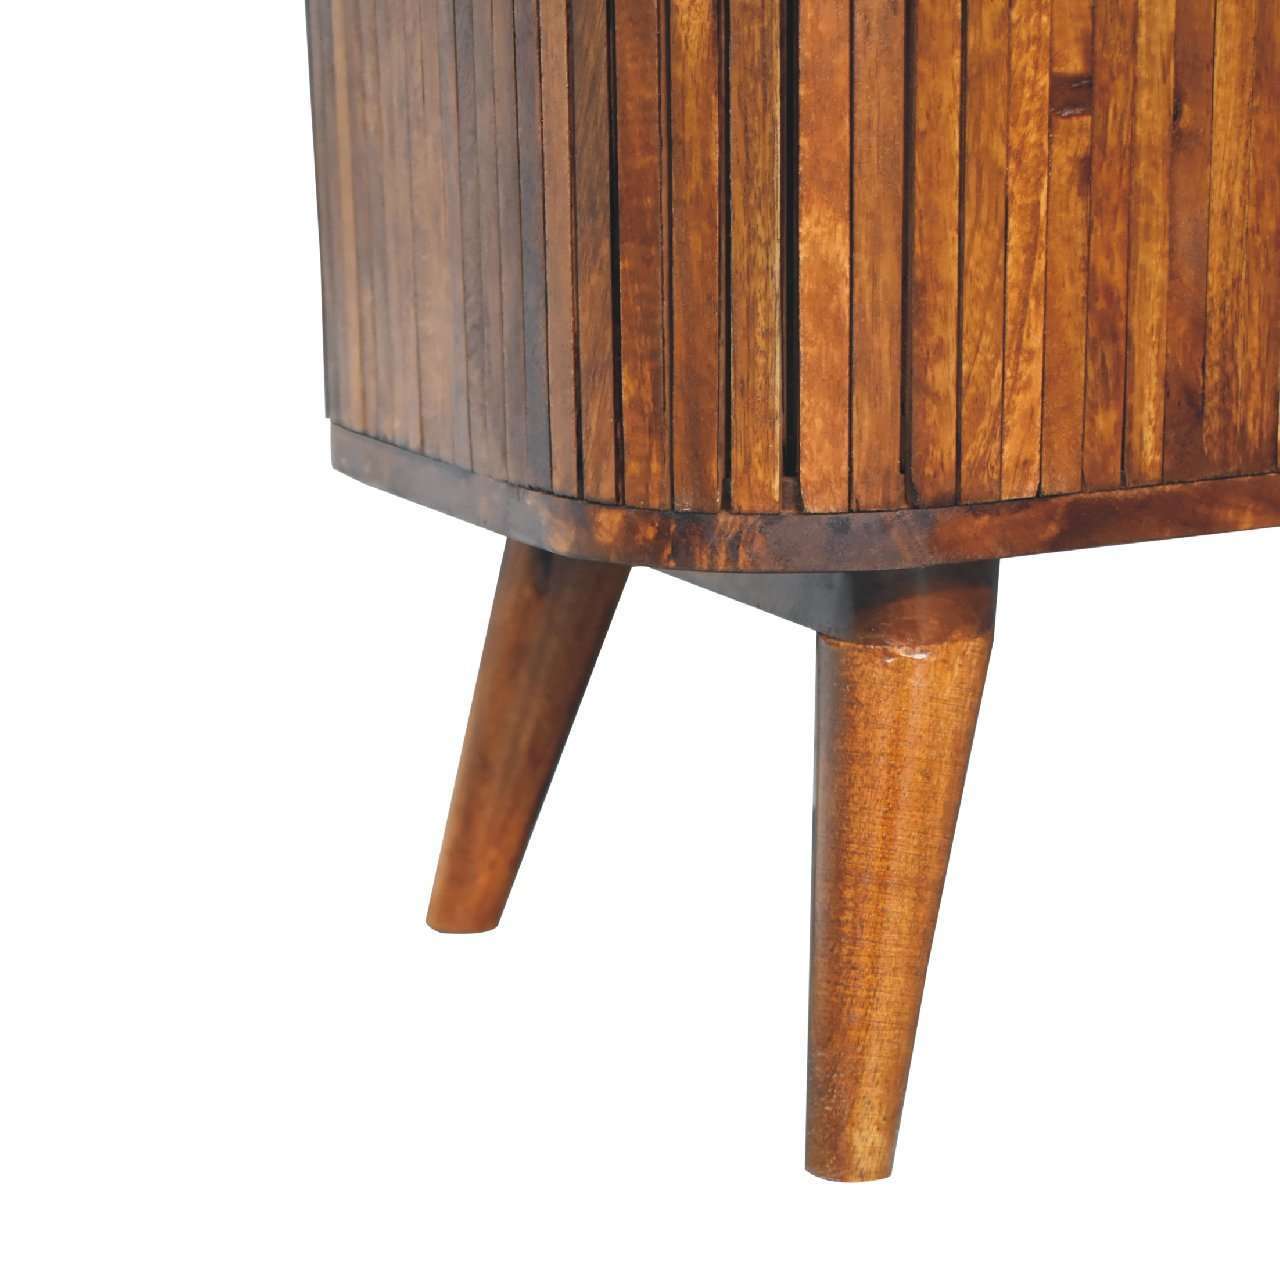 Ashpinoke:Chestnut Stripe Cabinet-Cabinets-Artisan